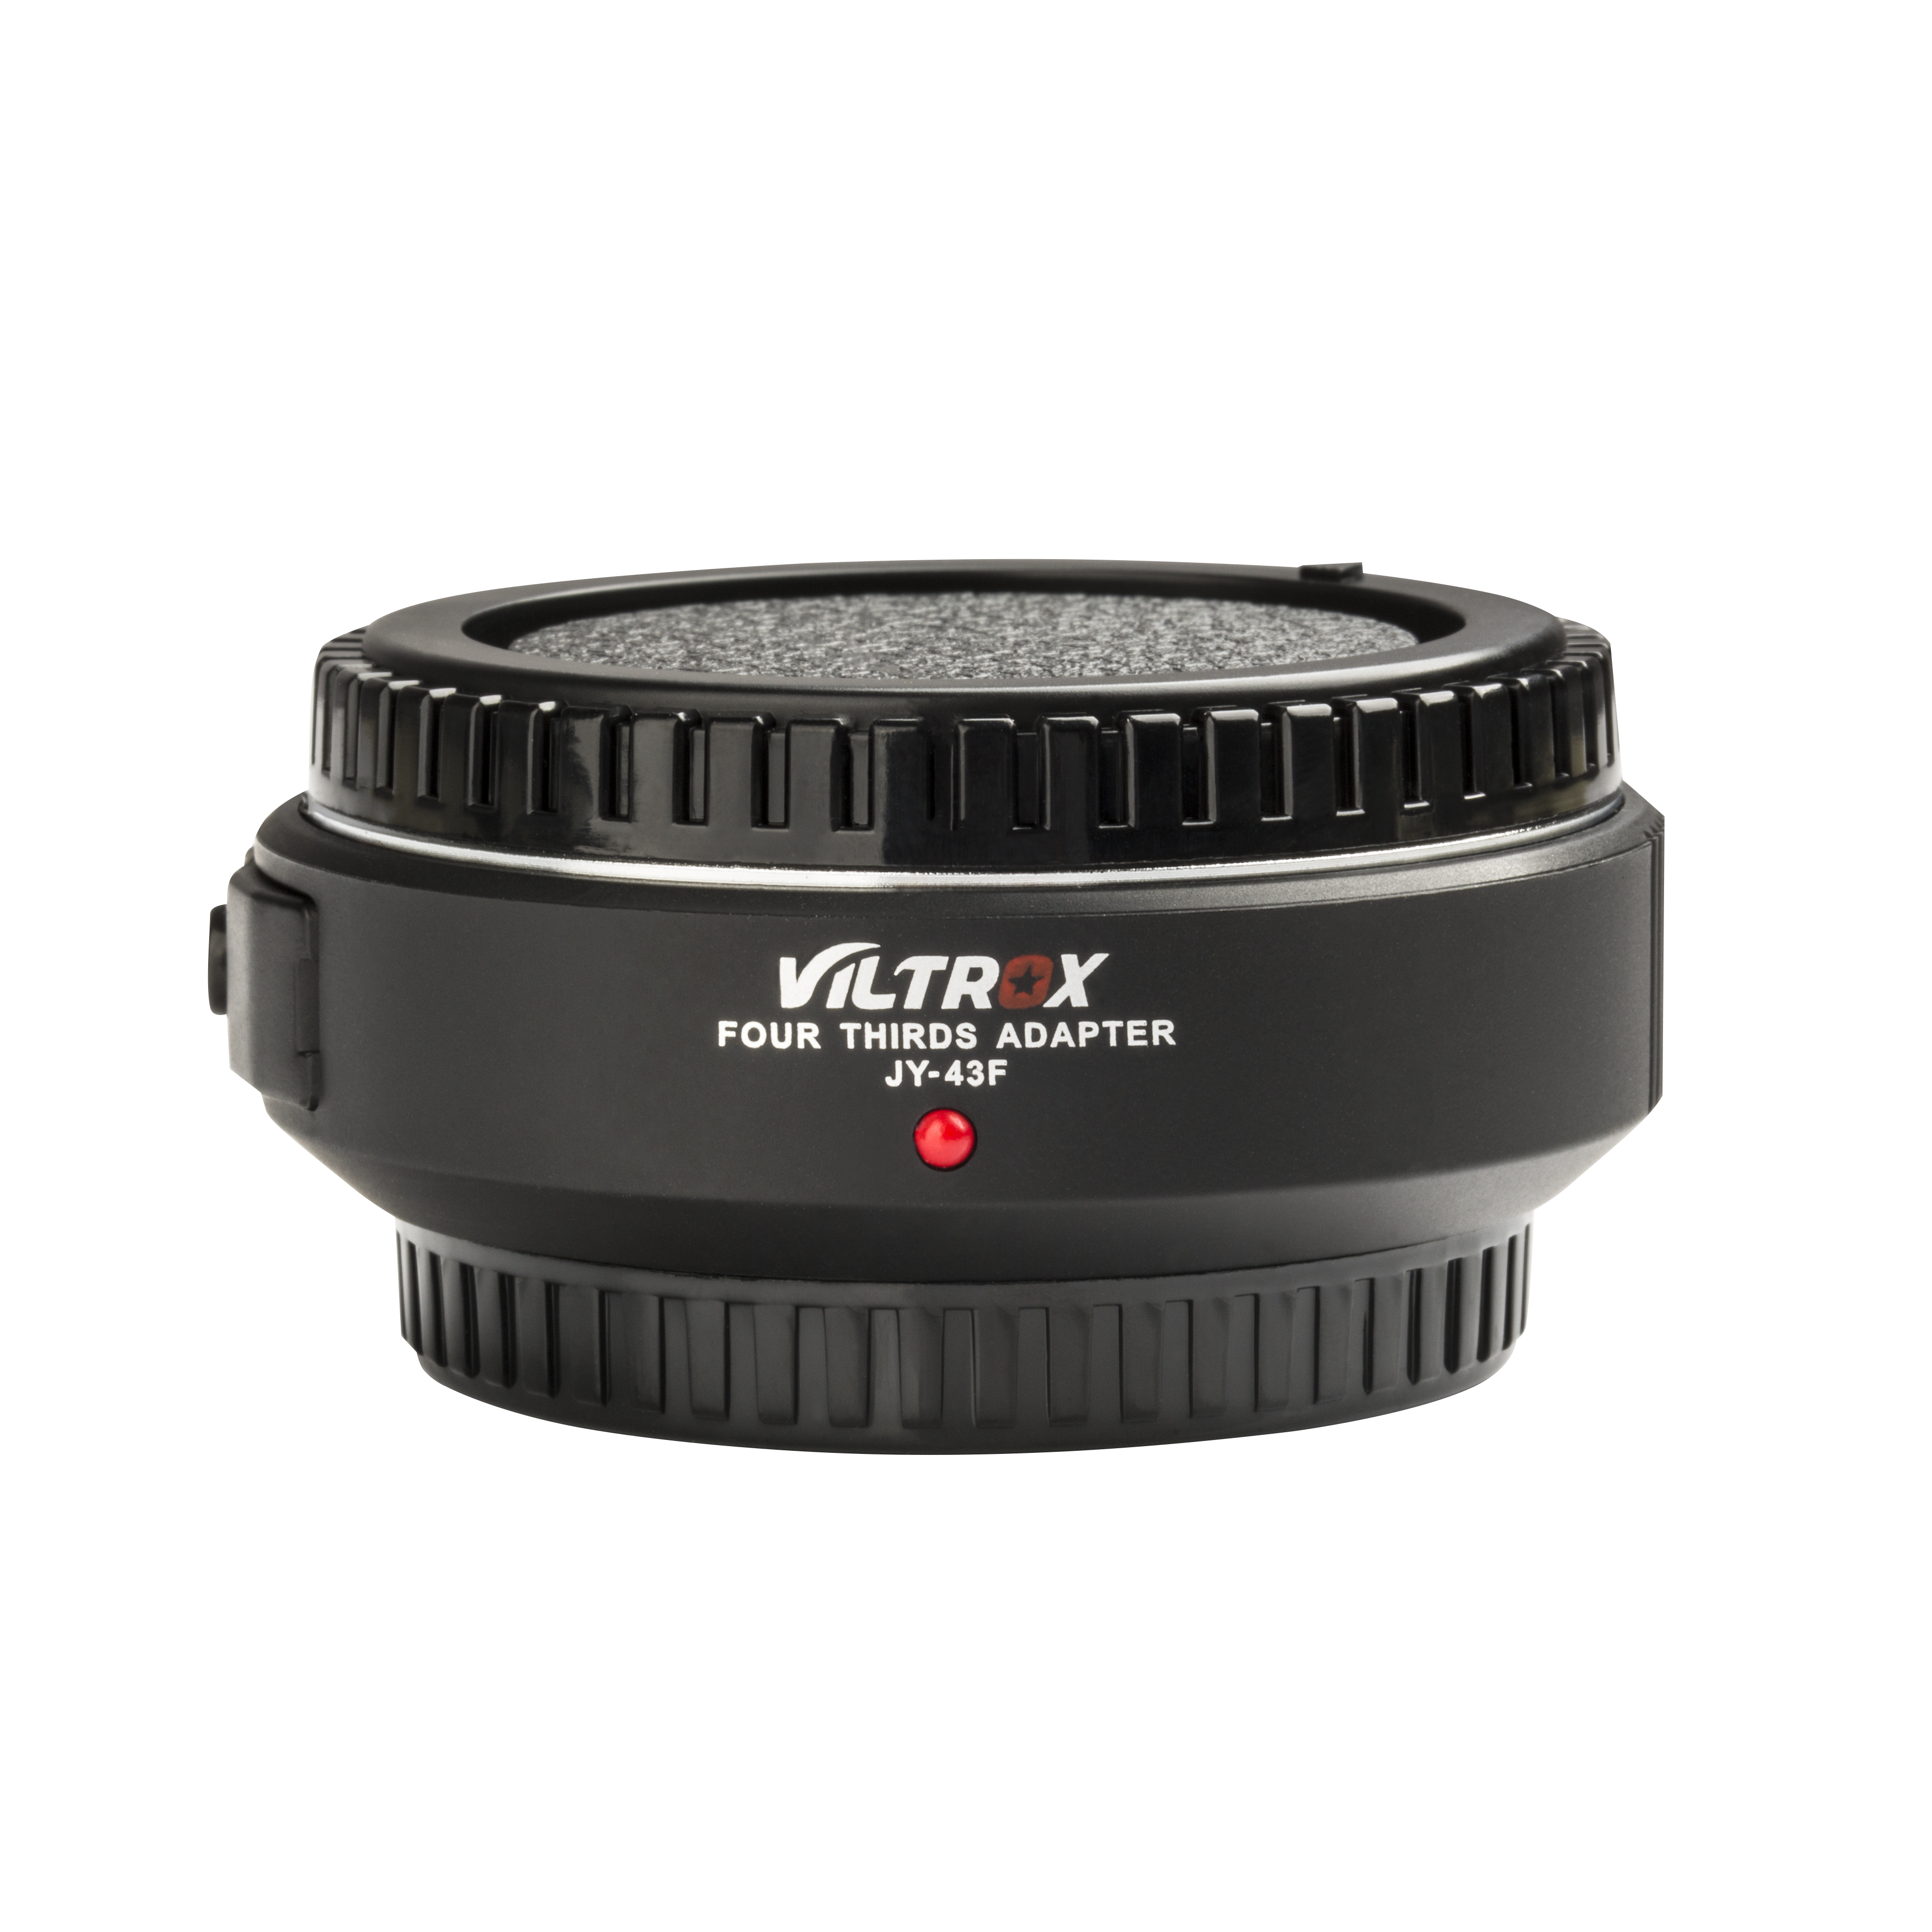 Viltrox JY-43F Autofocus Adapter for FT mount Lens Goes to MFT M43 Mount Camera